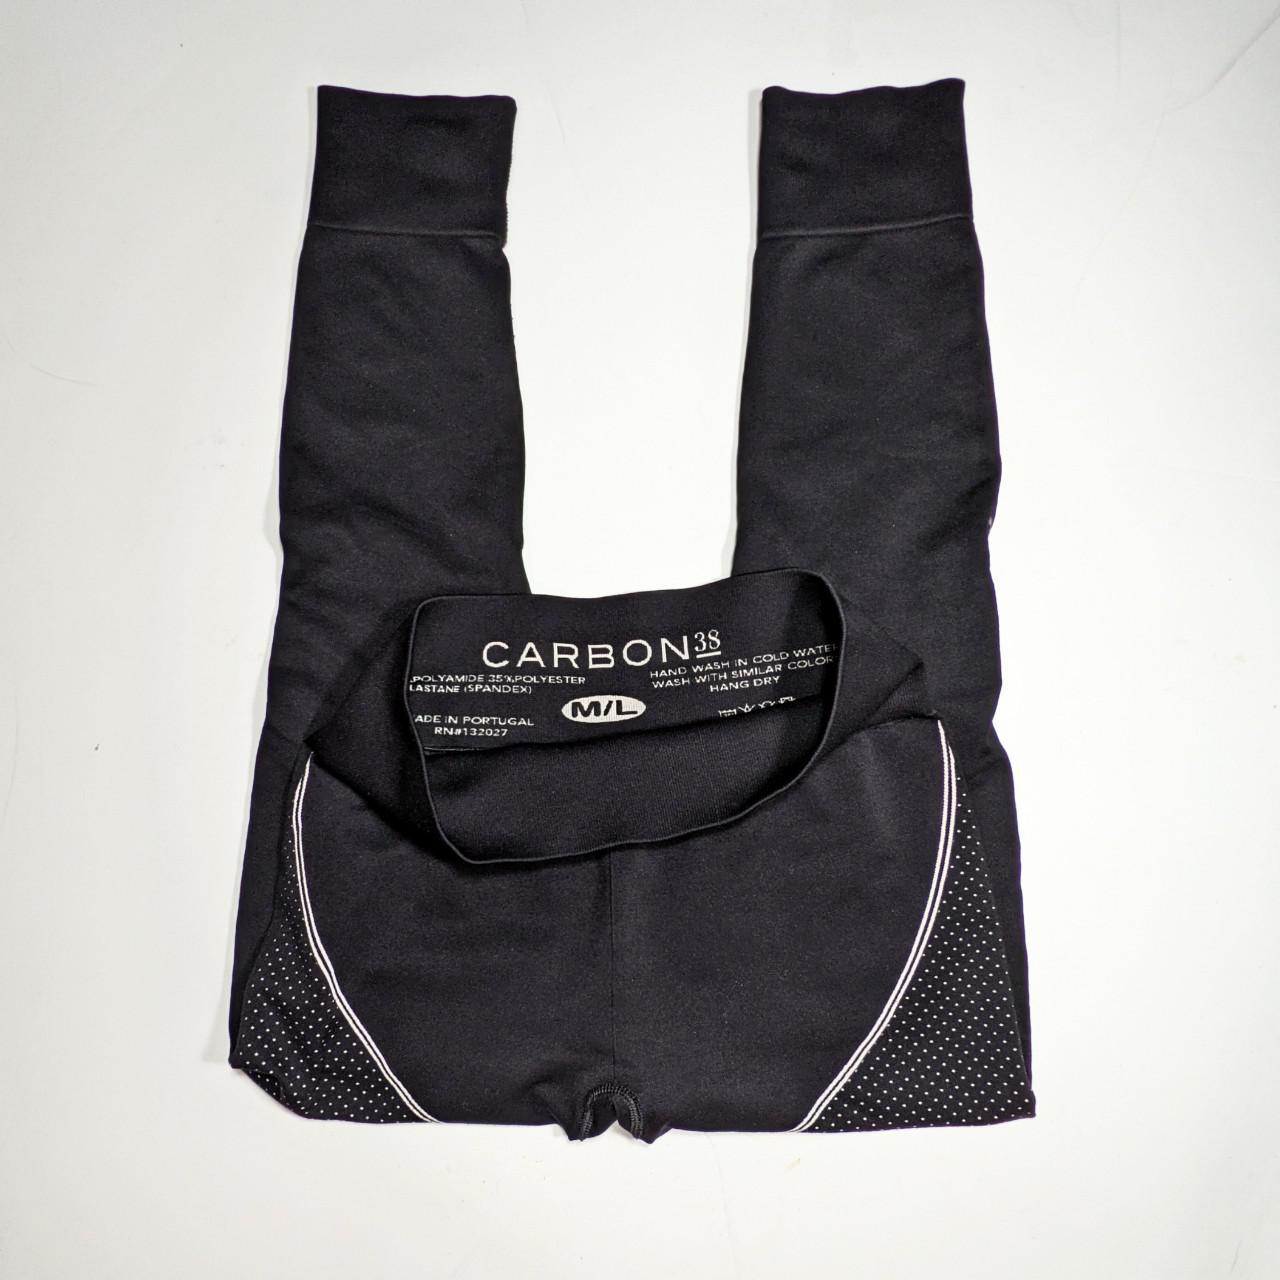 Carbon38 Black Yoga Pants Compression High Rise